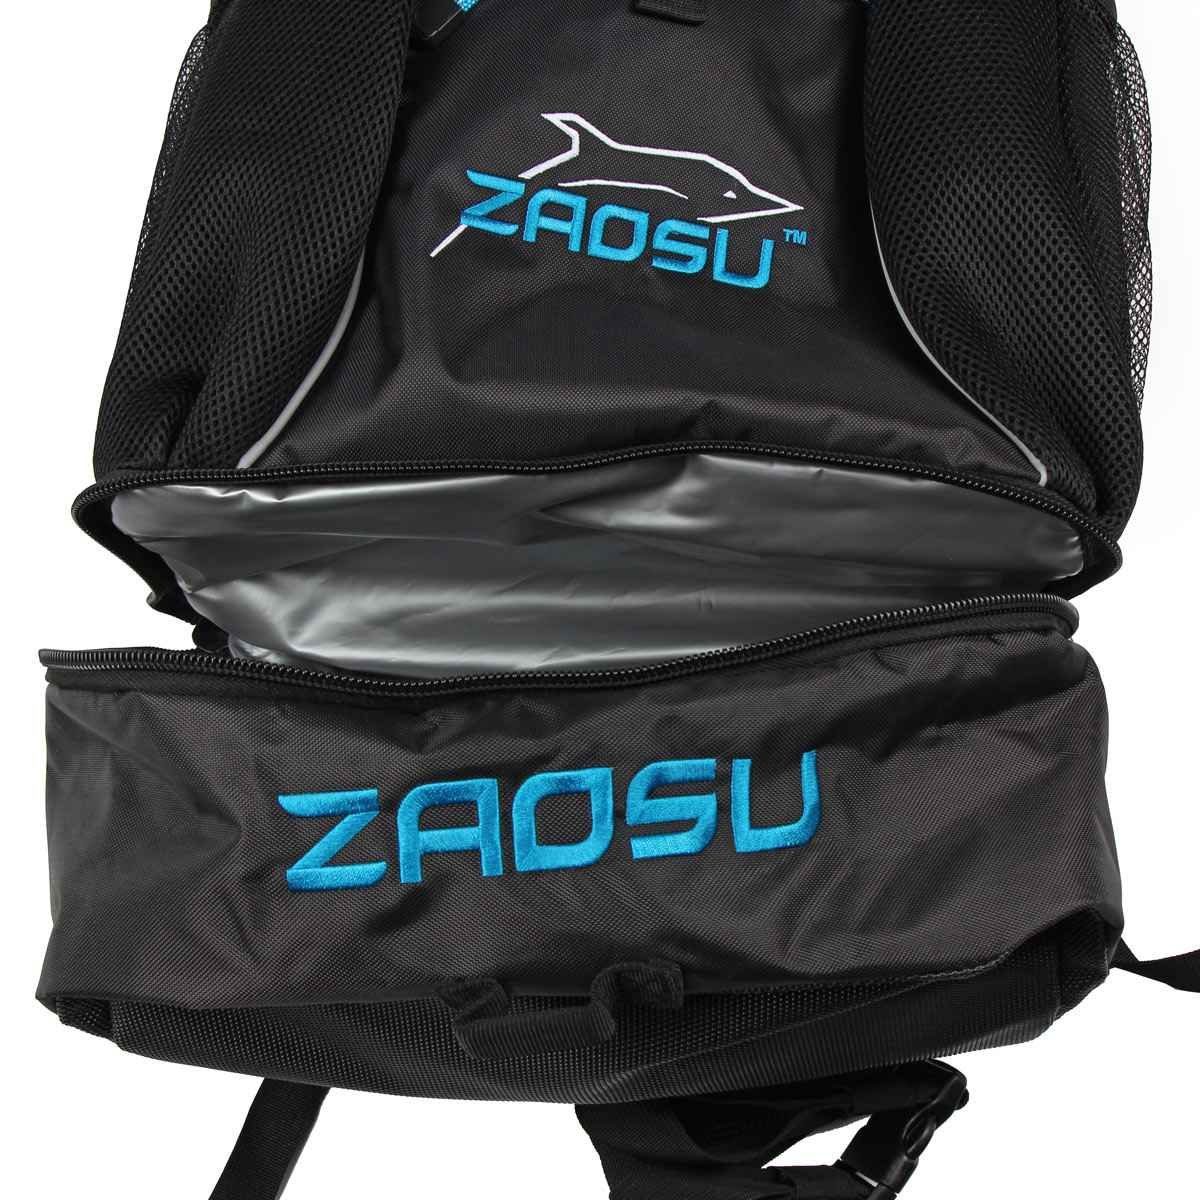 Sportrucksack Bag ZAOSU Transition blau